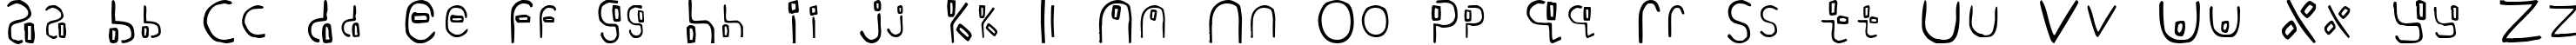 Пример написания английского алфавита шрифтом Yikatu